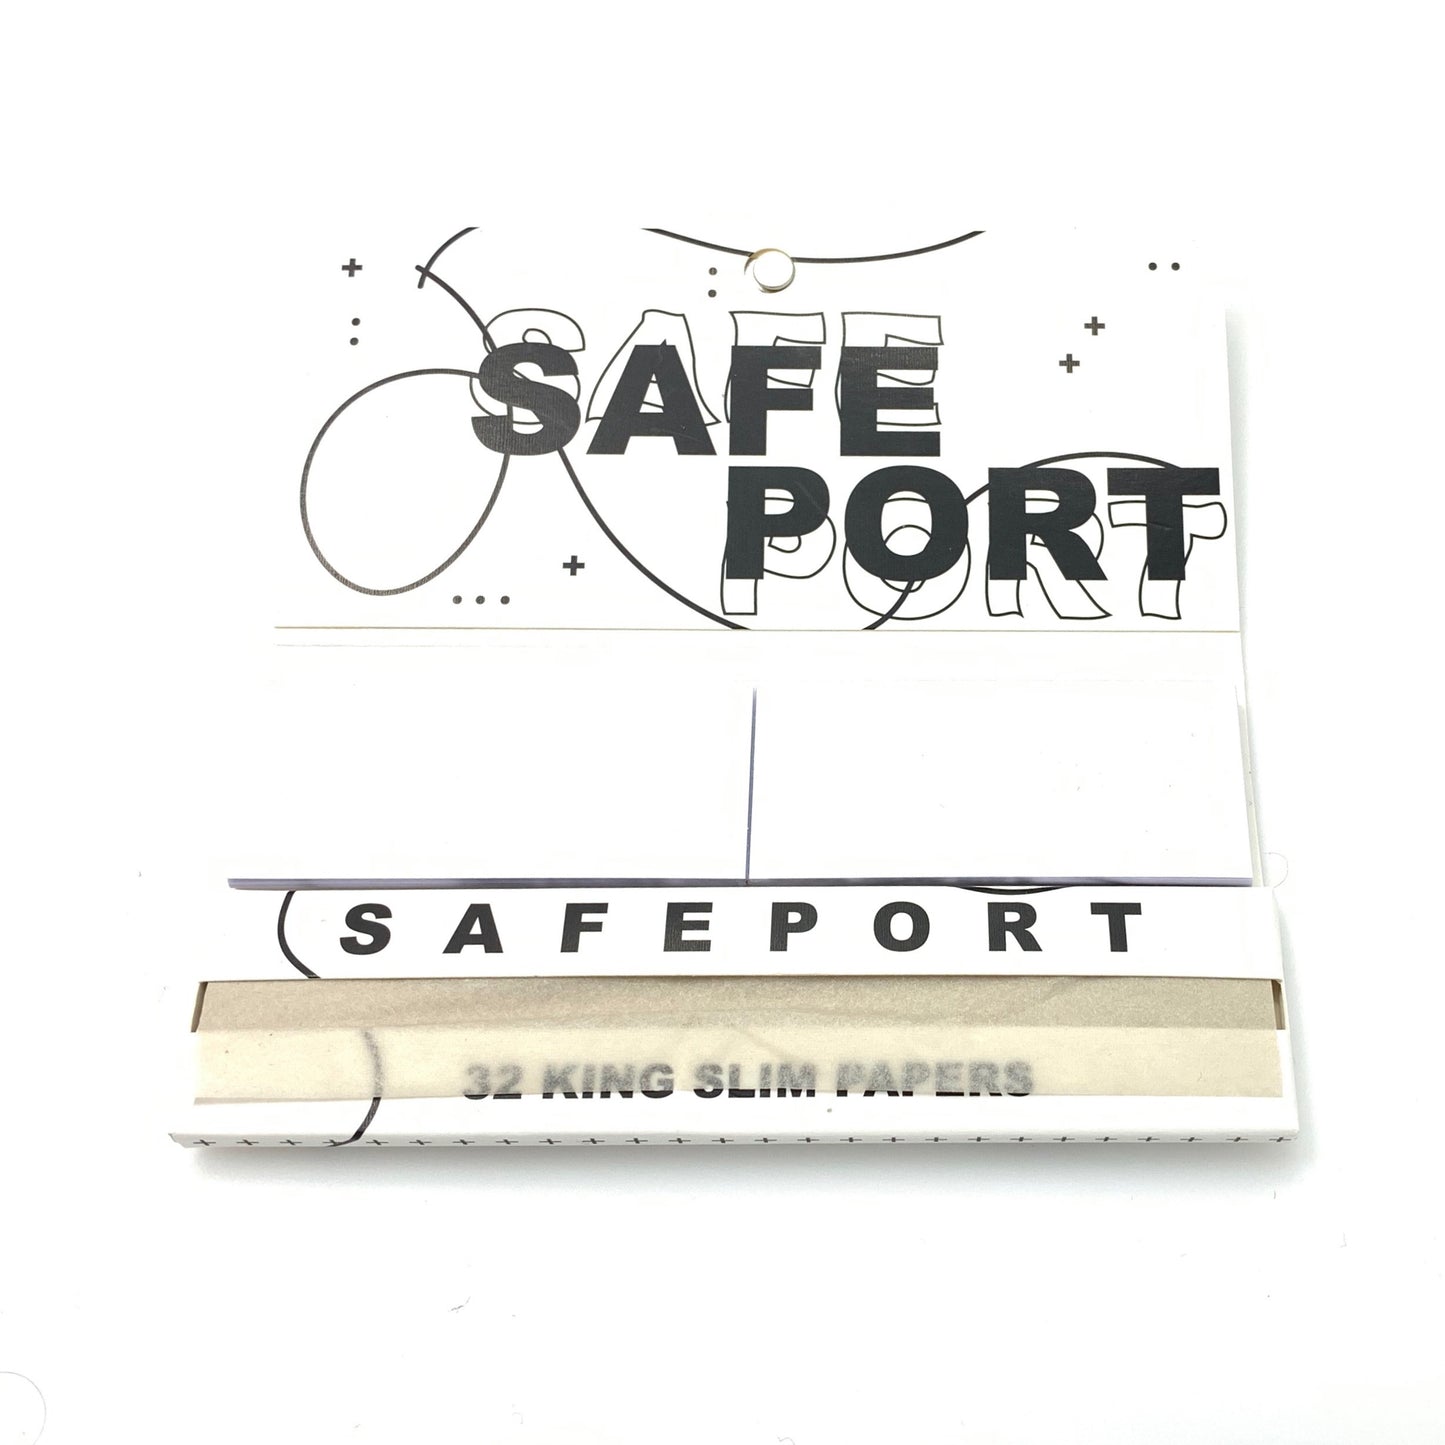 Safeport King Slim Rolling Papers